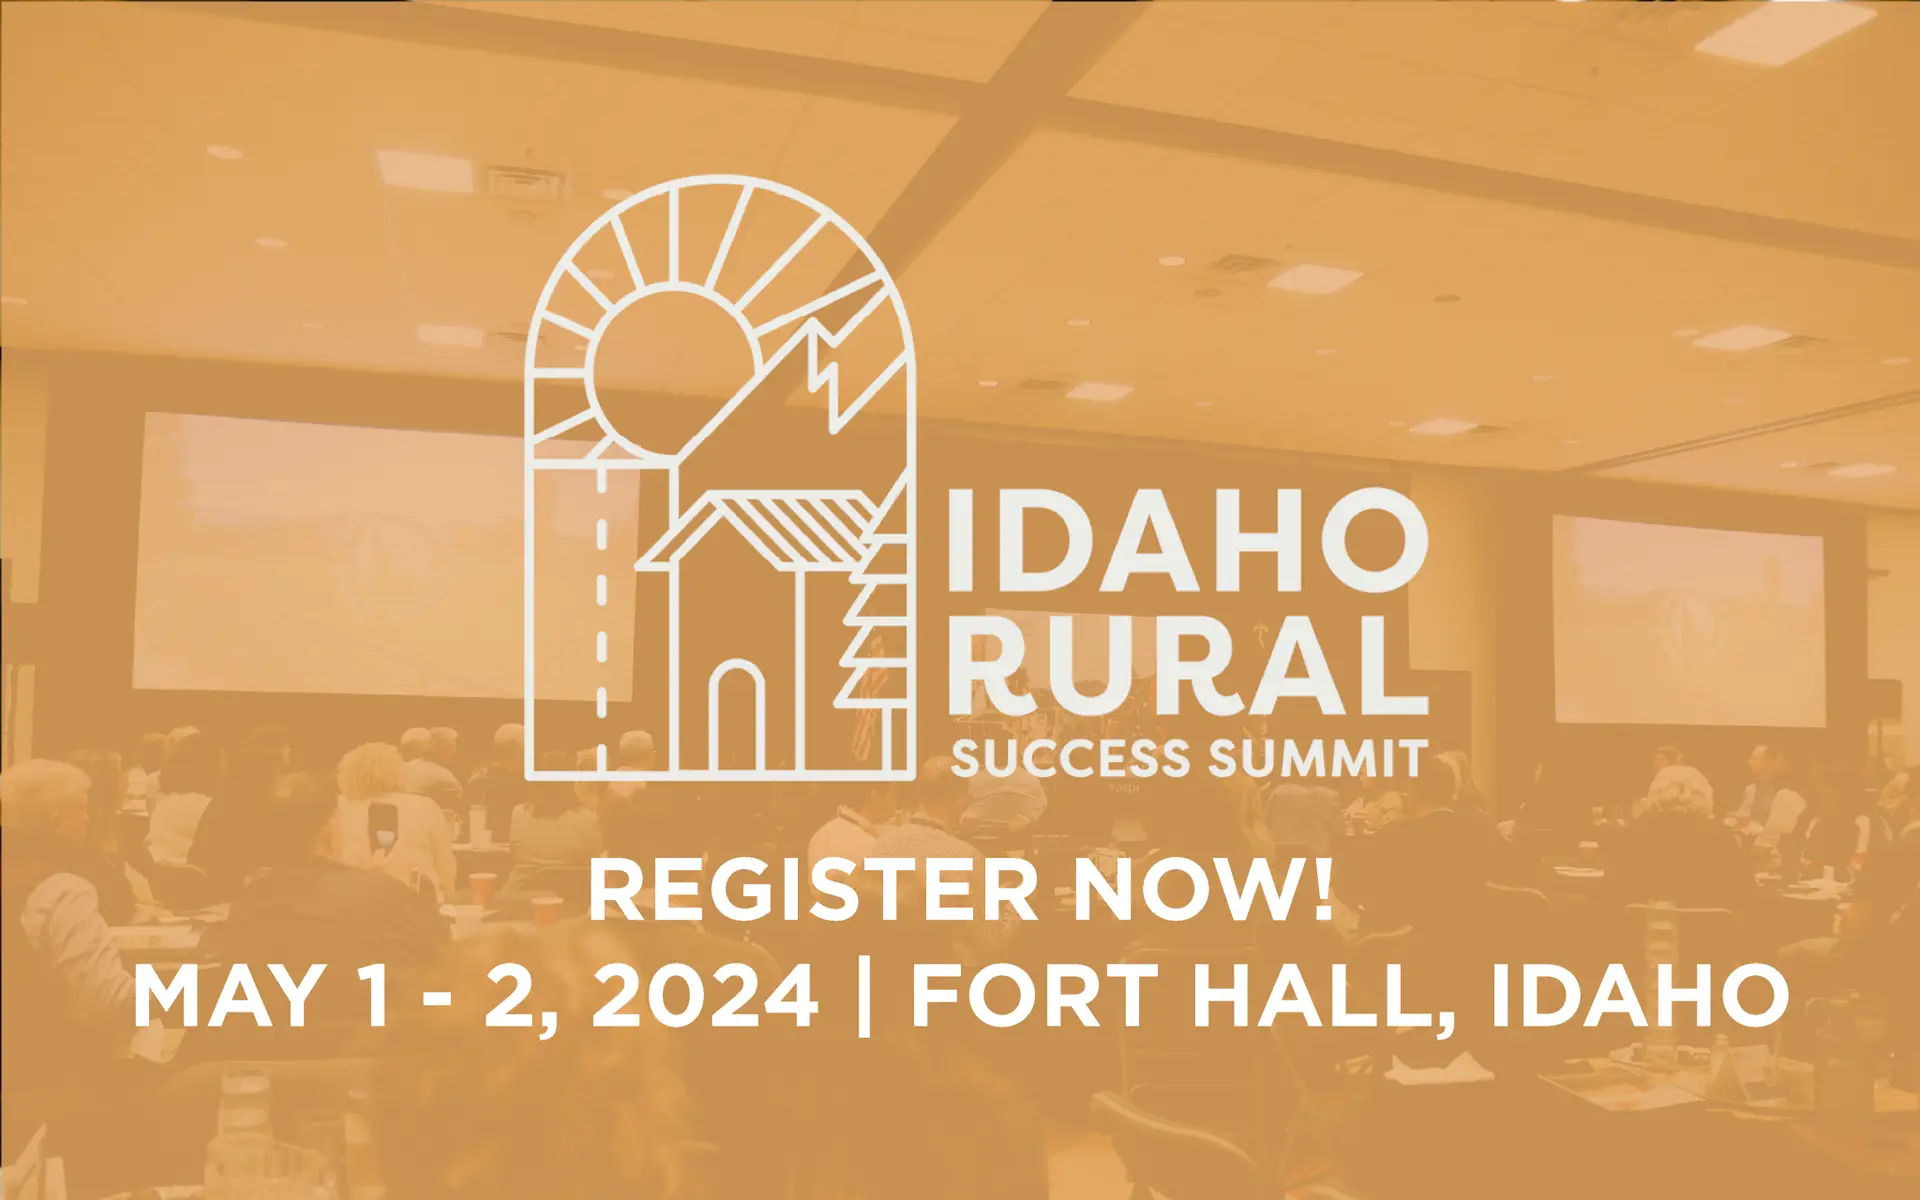 The Idaho Rural Success Summit